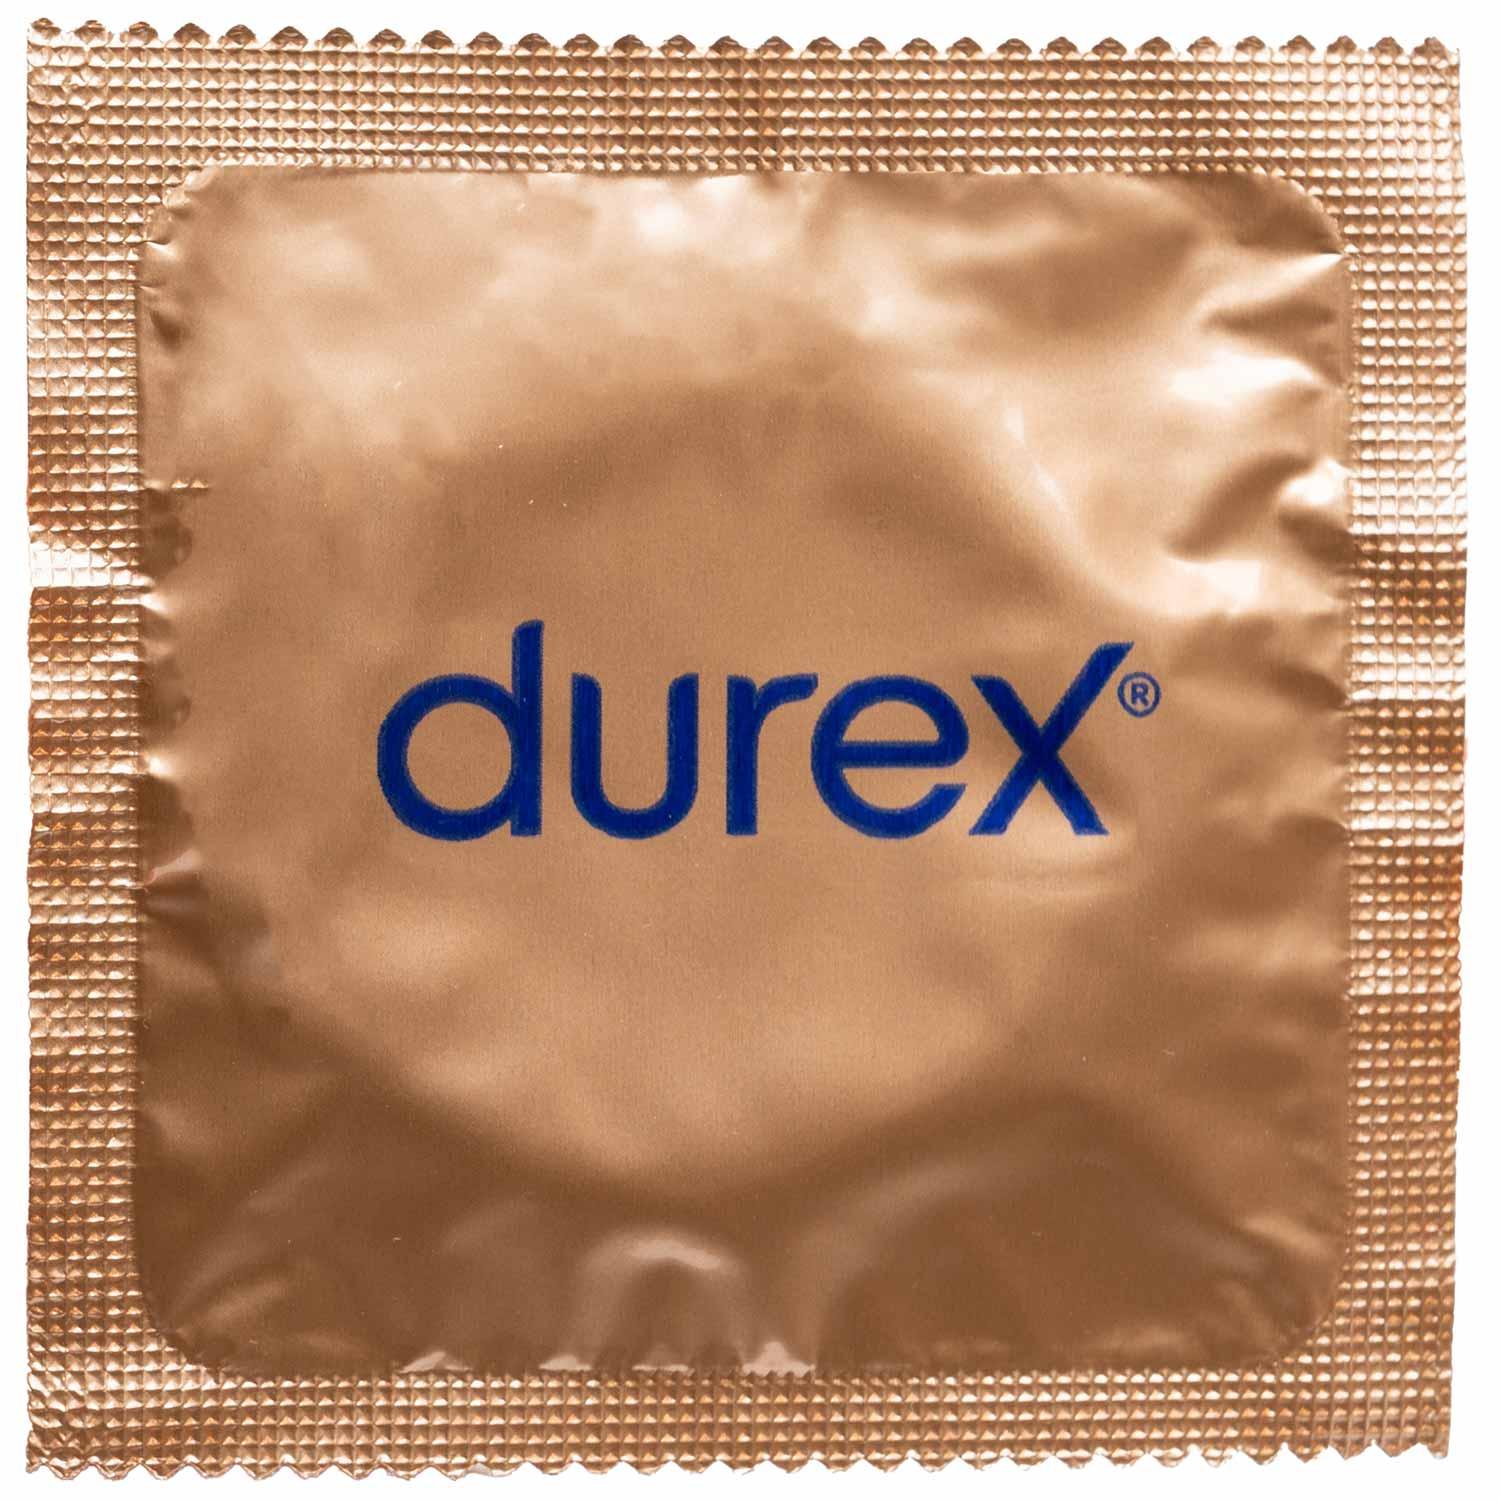 Durex Natural Feeling Condoms 30 pcs, Latex Free, with Reservoir, Ø 56mm, 200mm